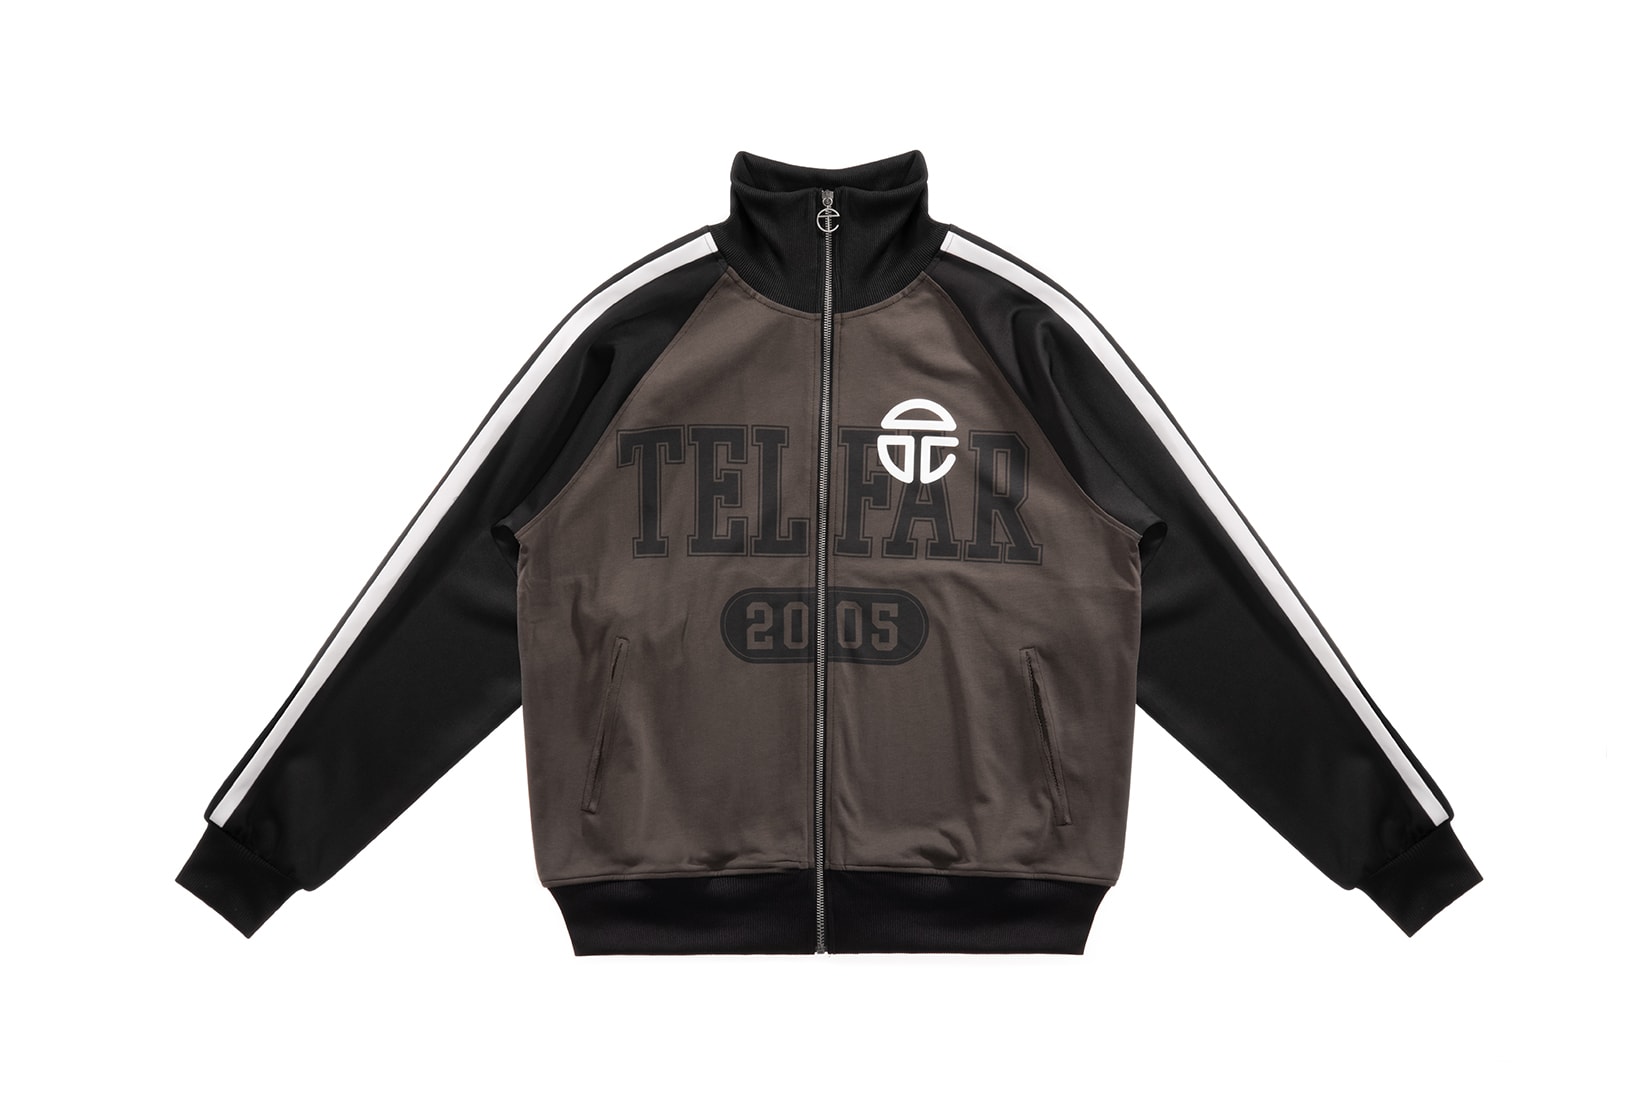 Telfar Black Track Styles Collection Jacket Front